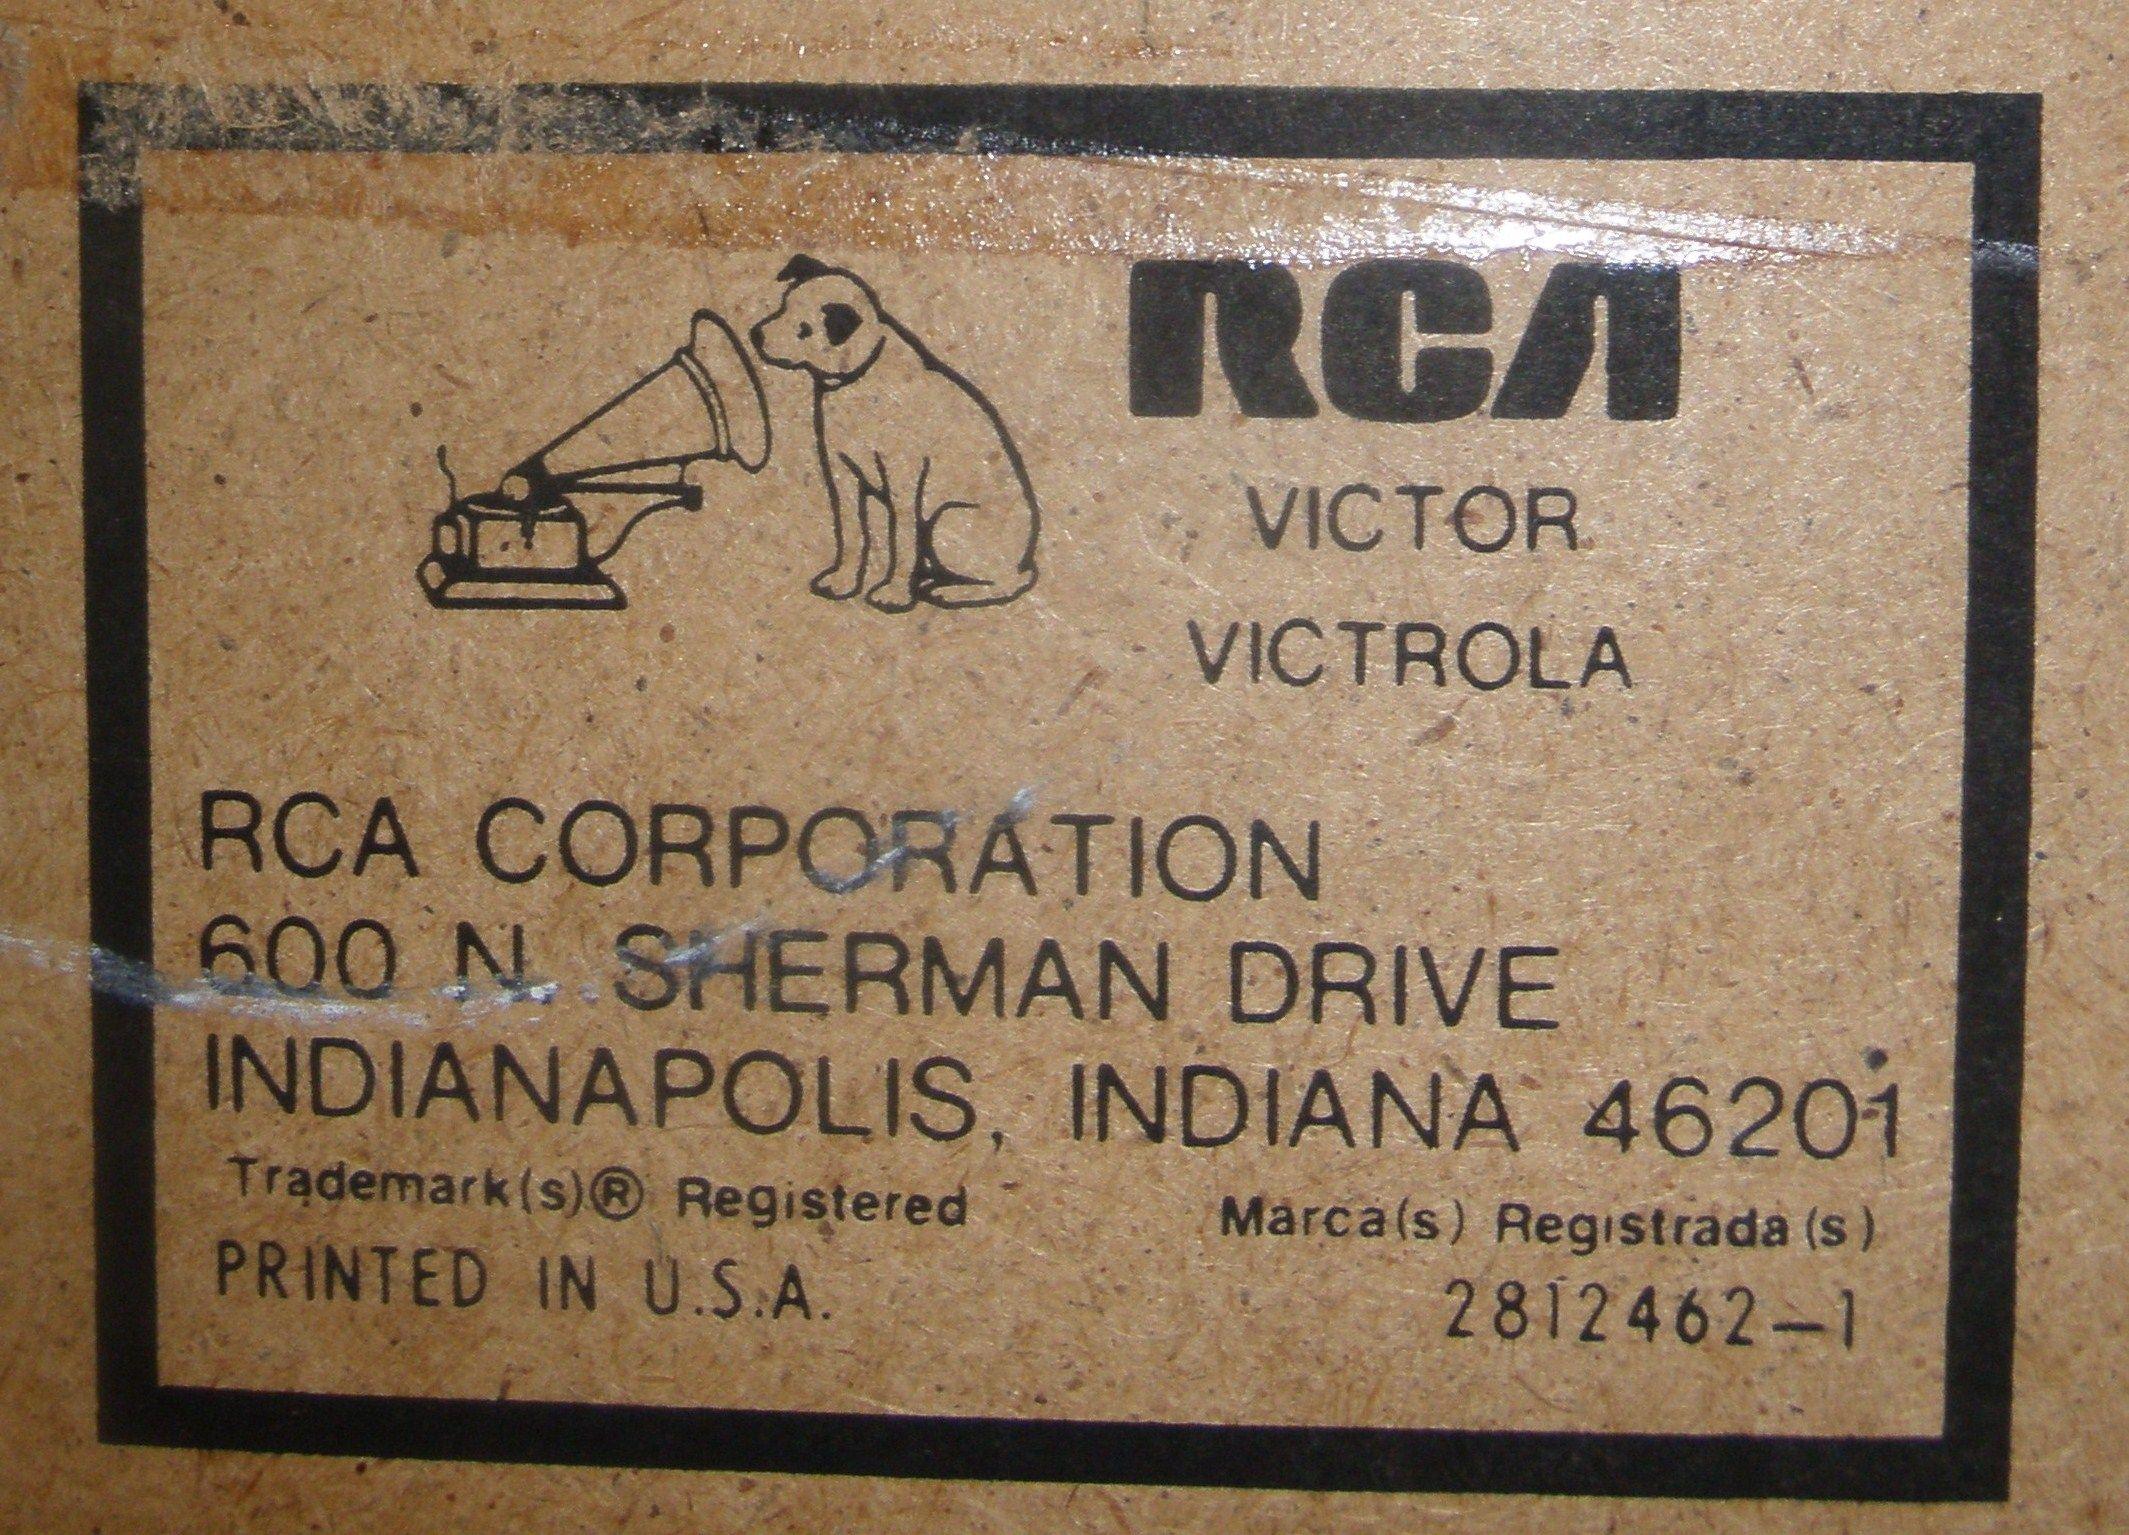 Victrola Logo - File:RCA Dimensia Victrola logo.JPG - Wikimedia Commons